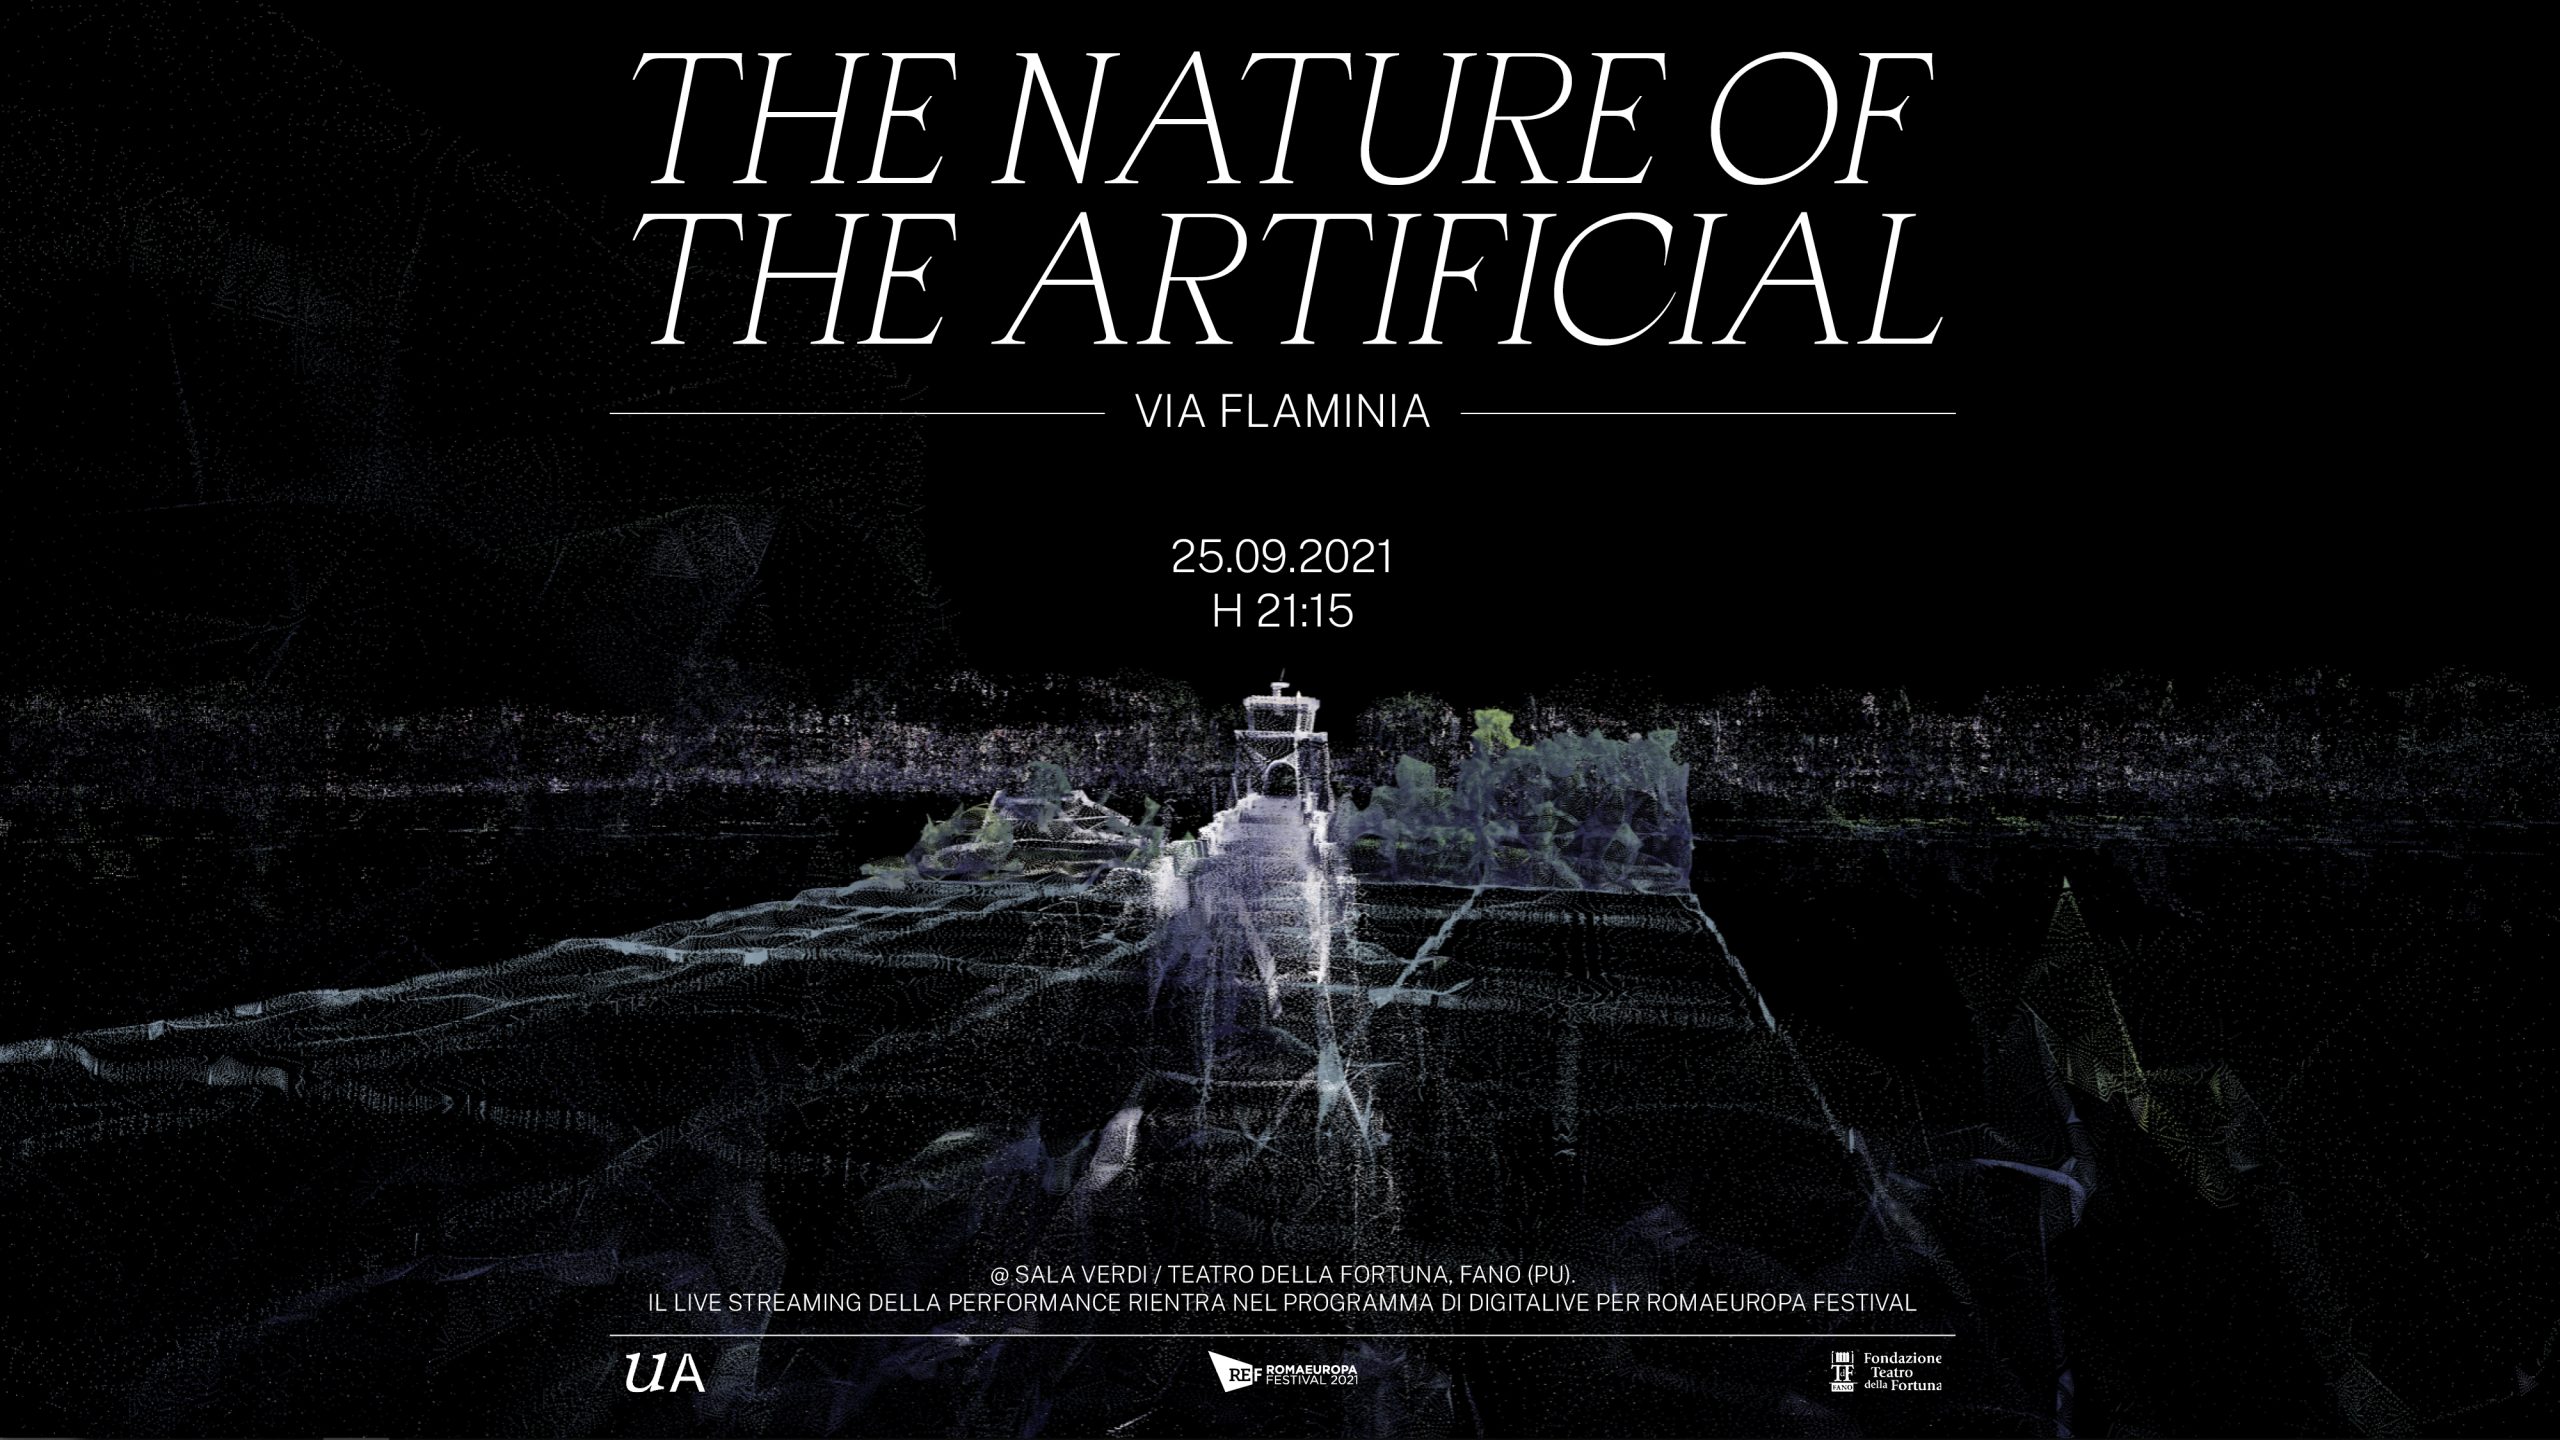 Via Flaminia: The Nature of the Artificial